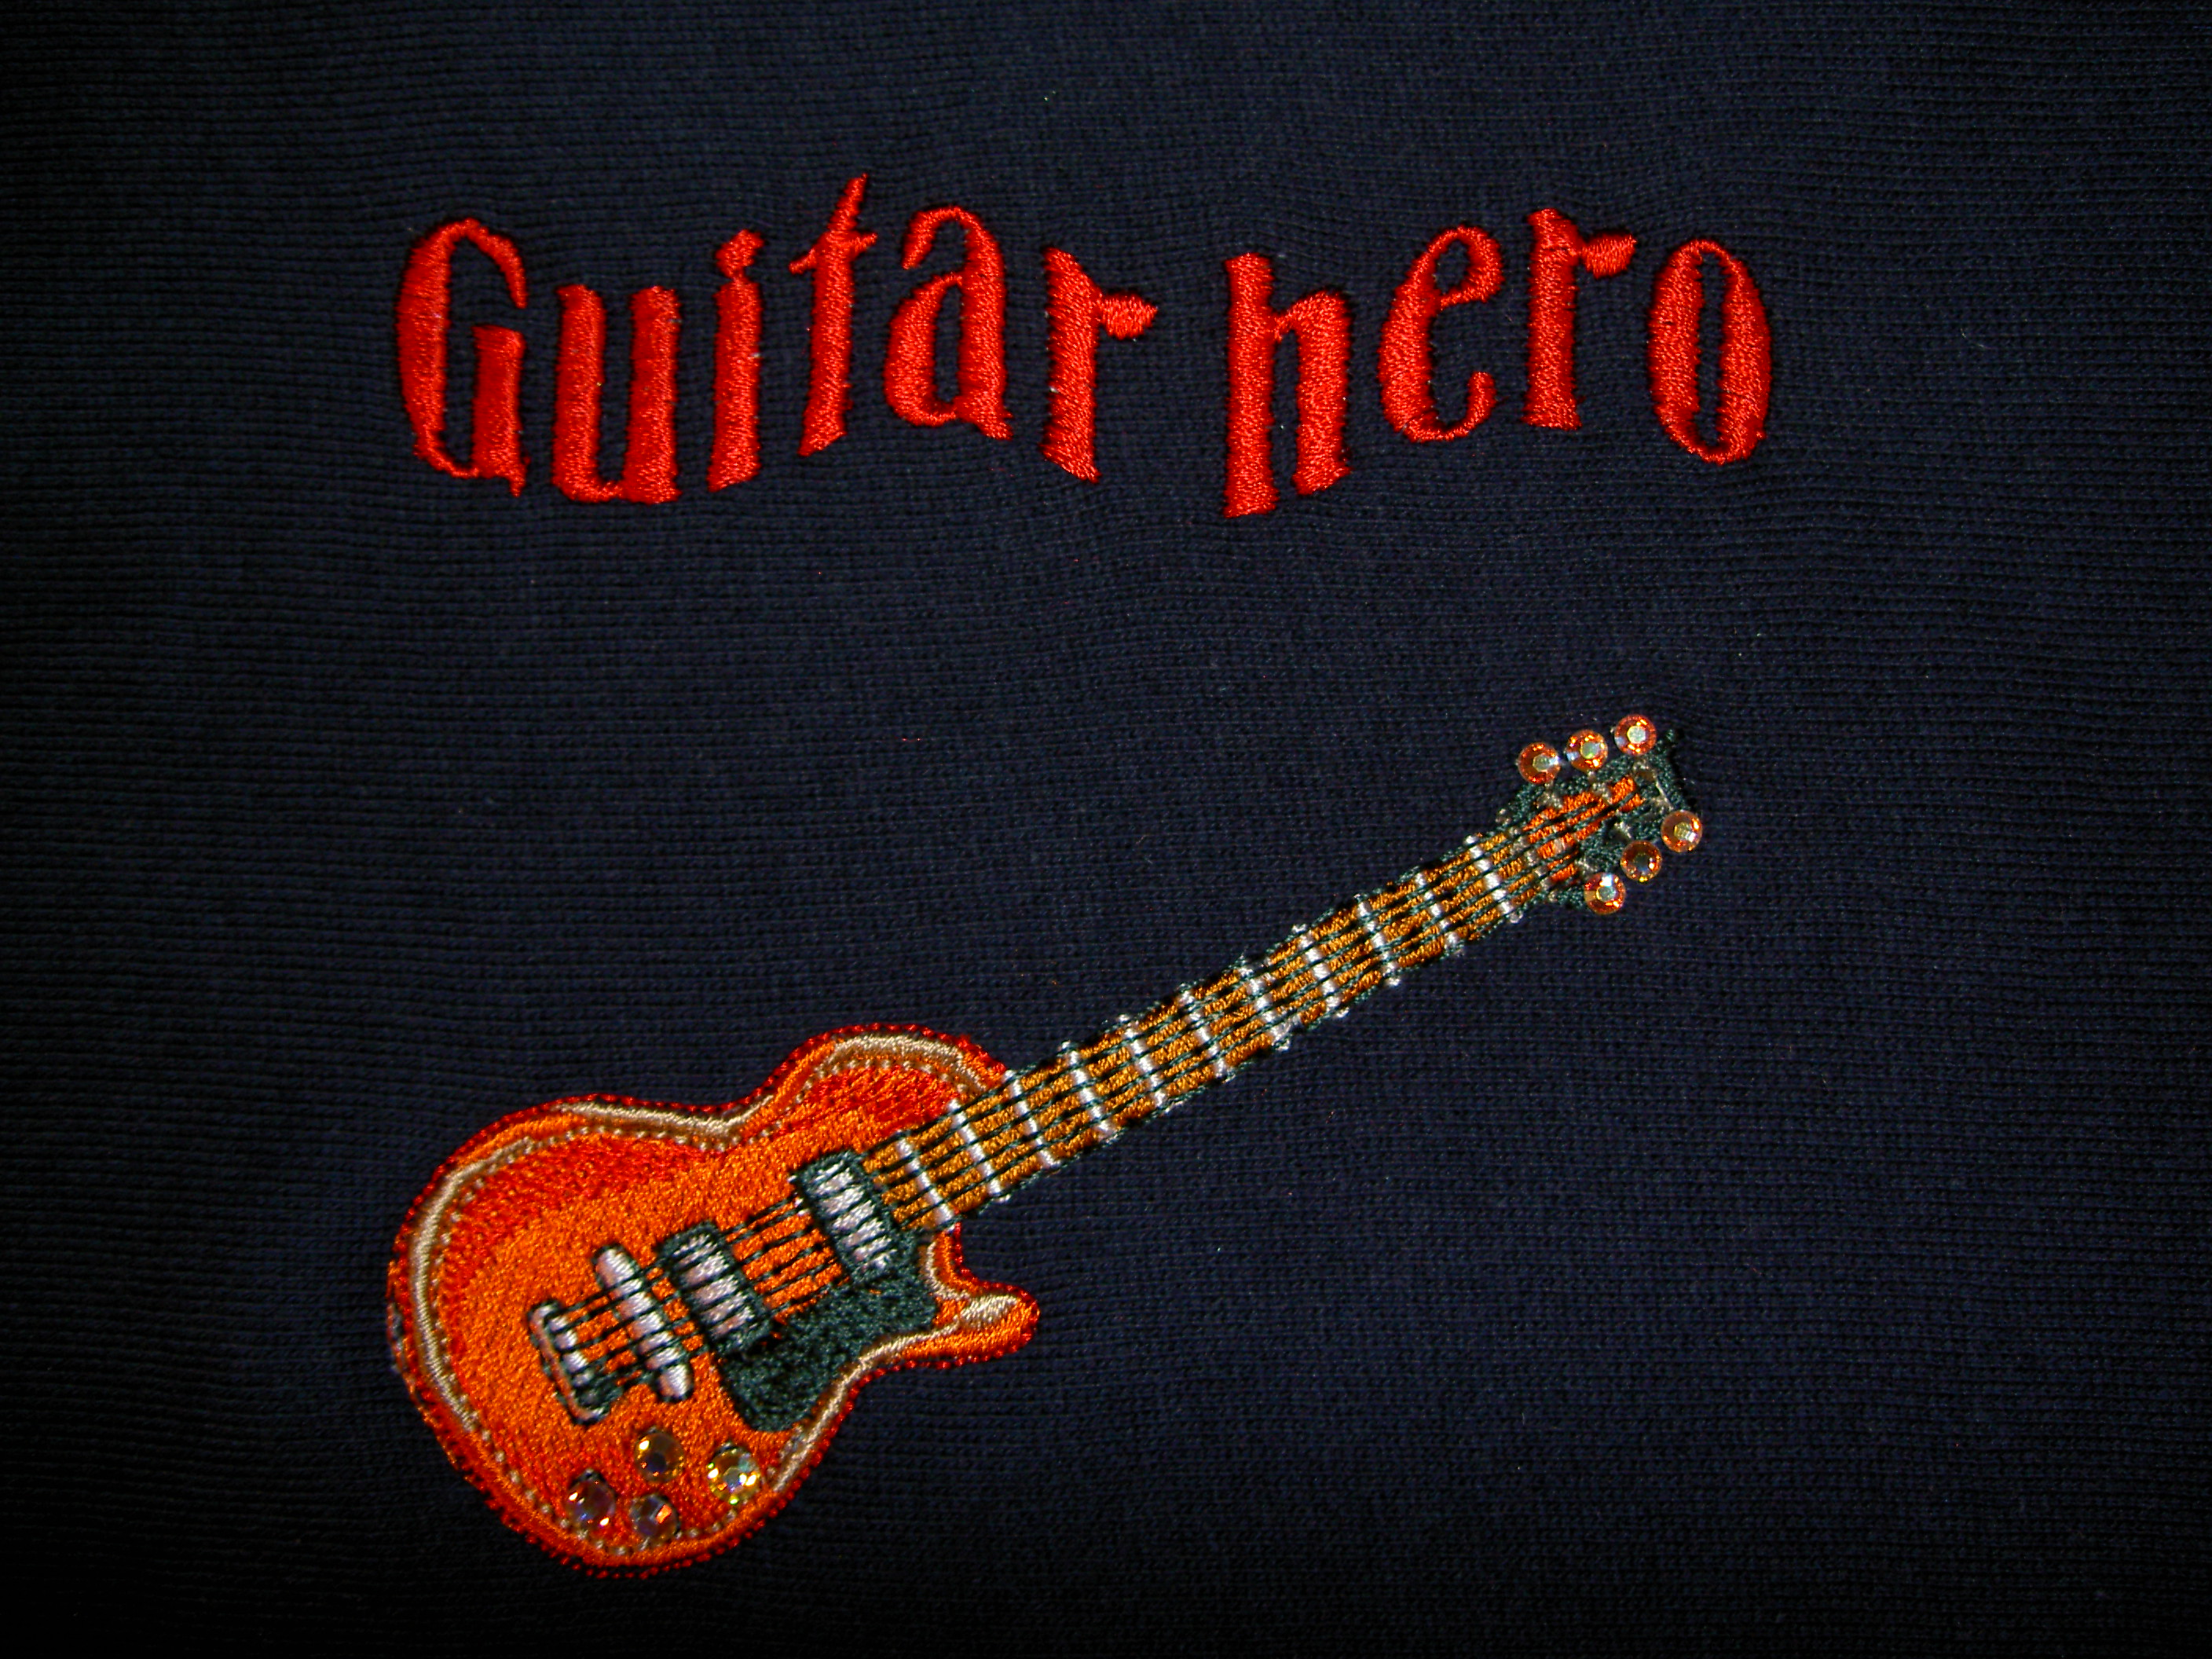 Broderad guitar med texten Guitar Hero